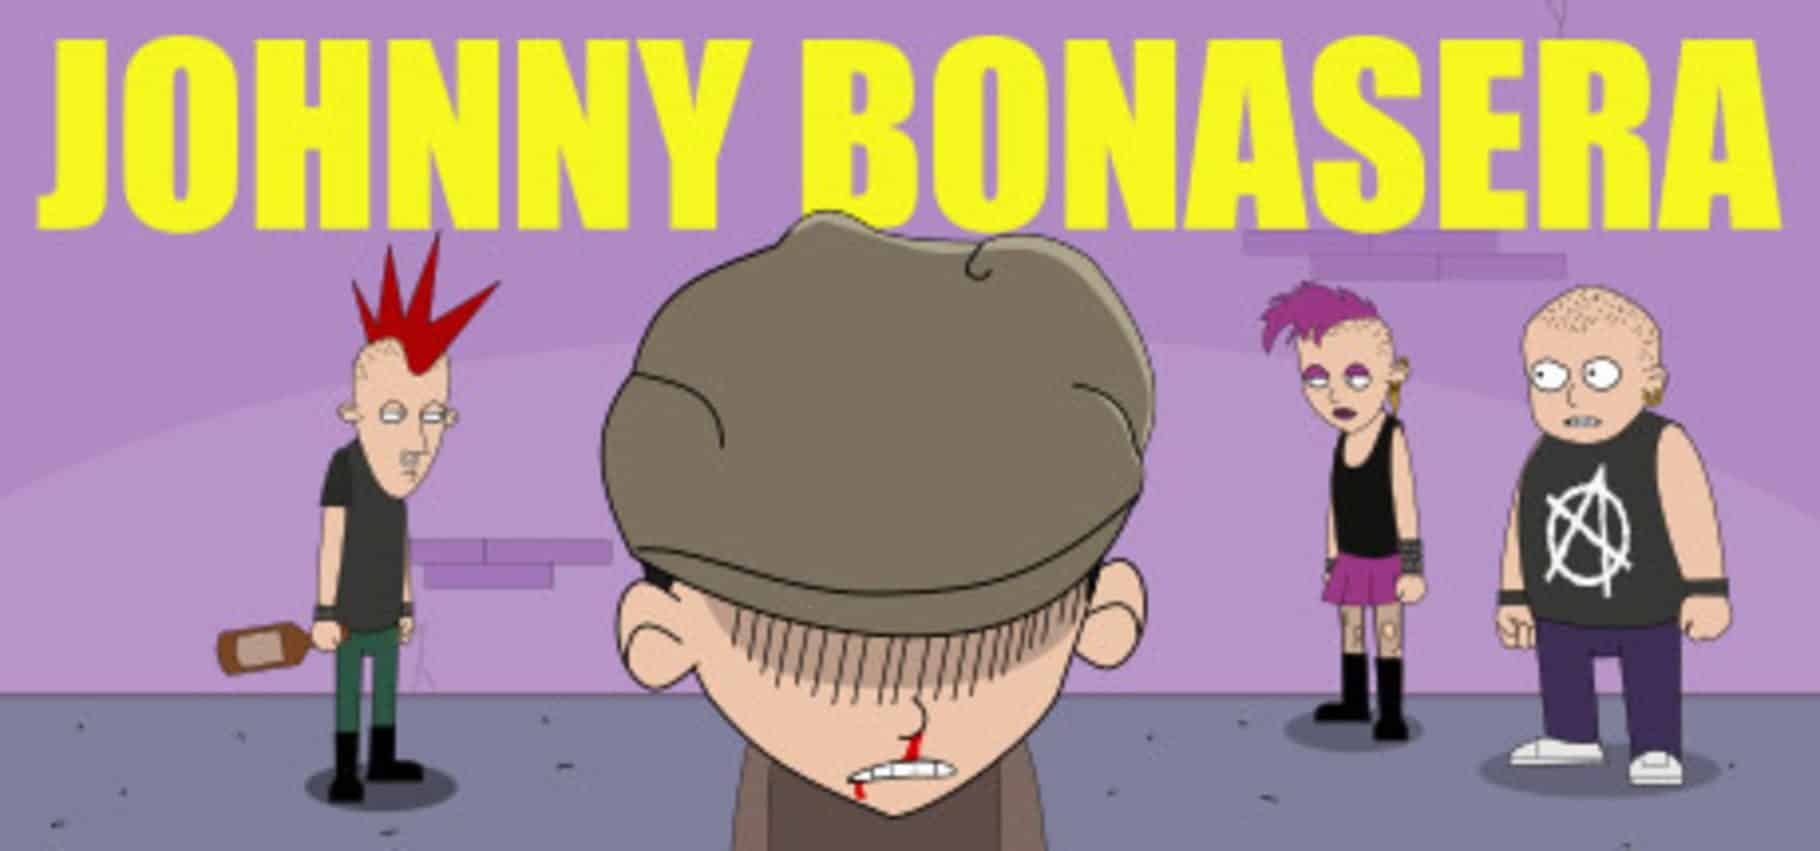 The Revenge of Johnny Bonasera